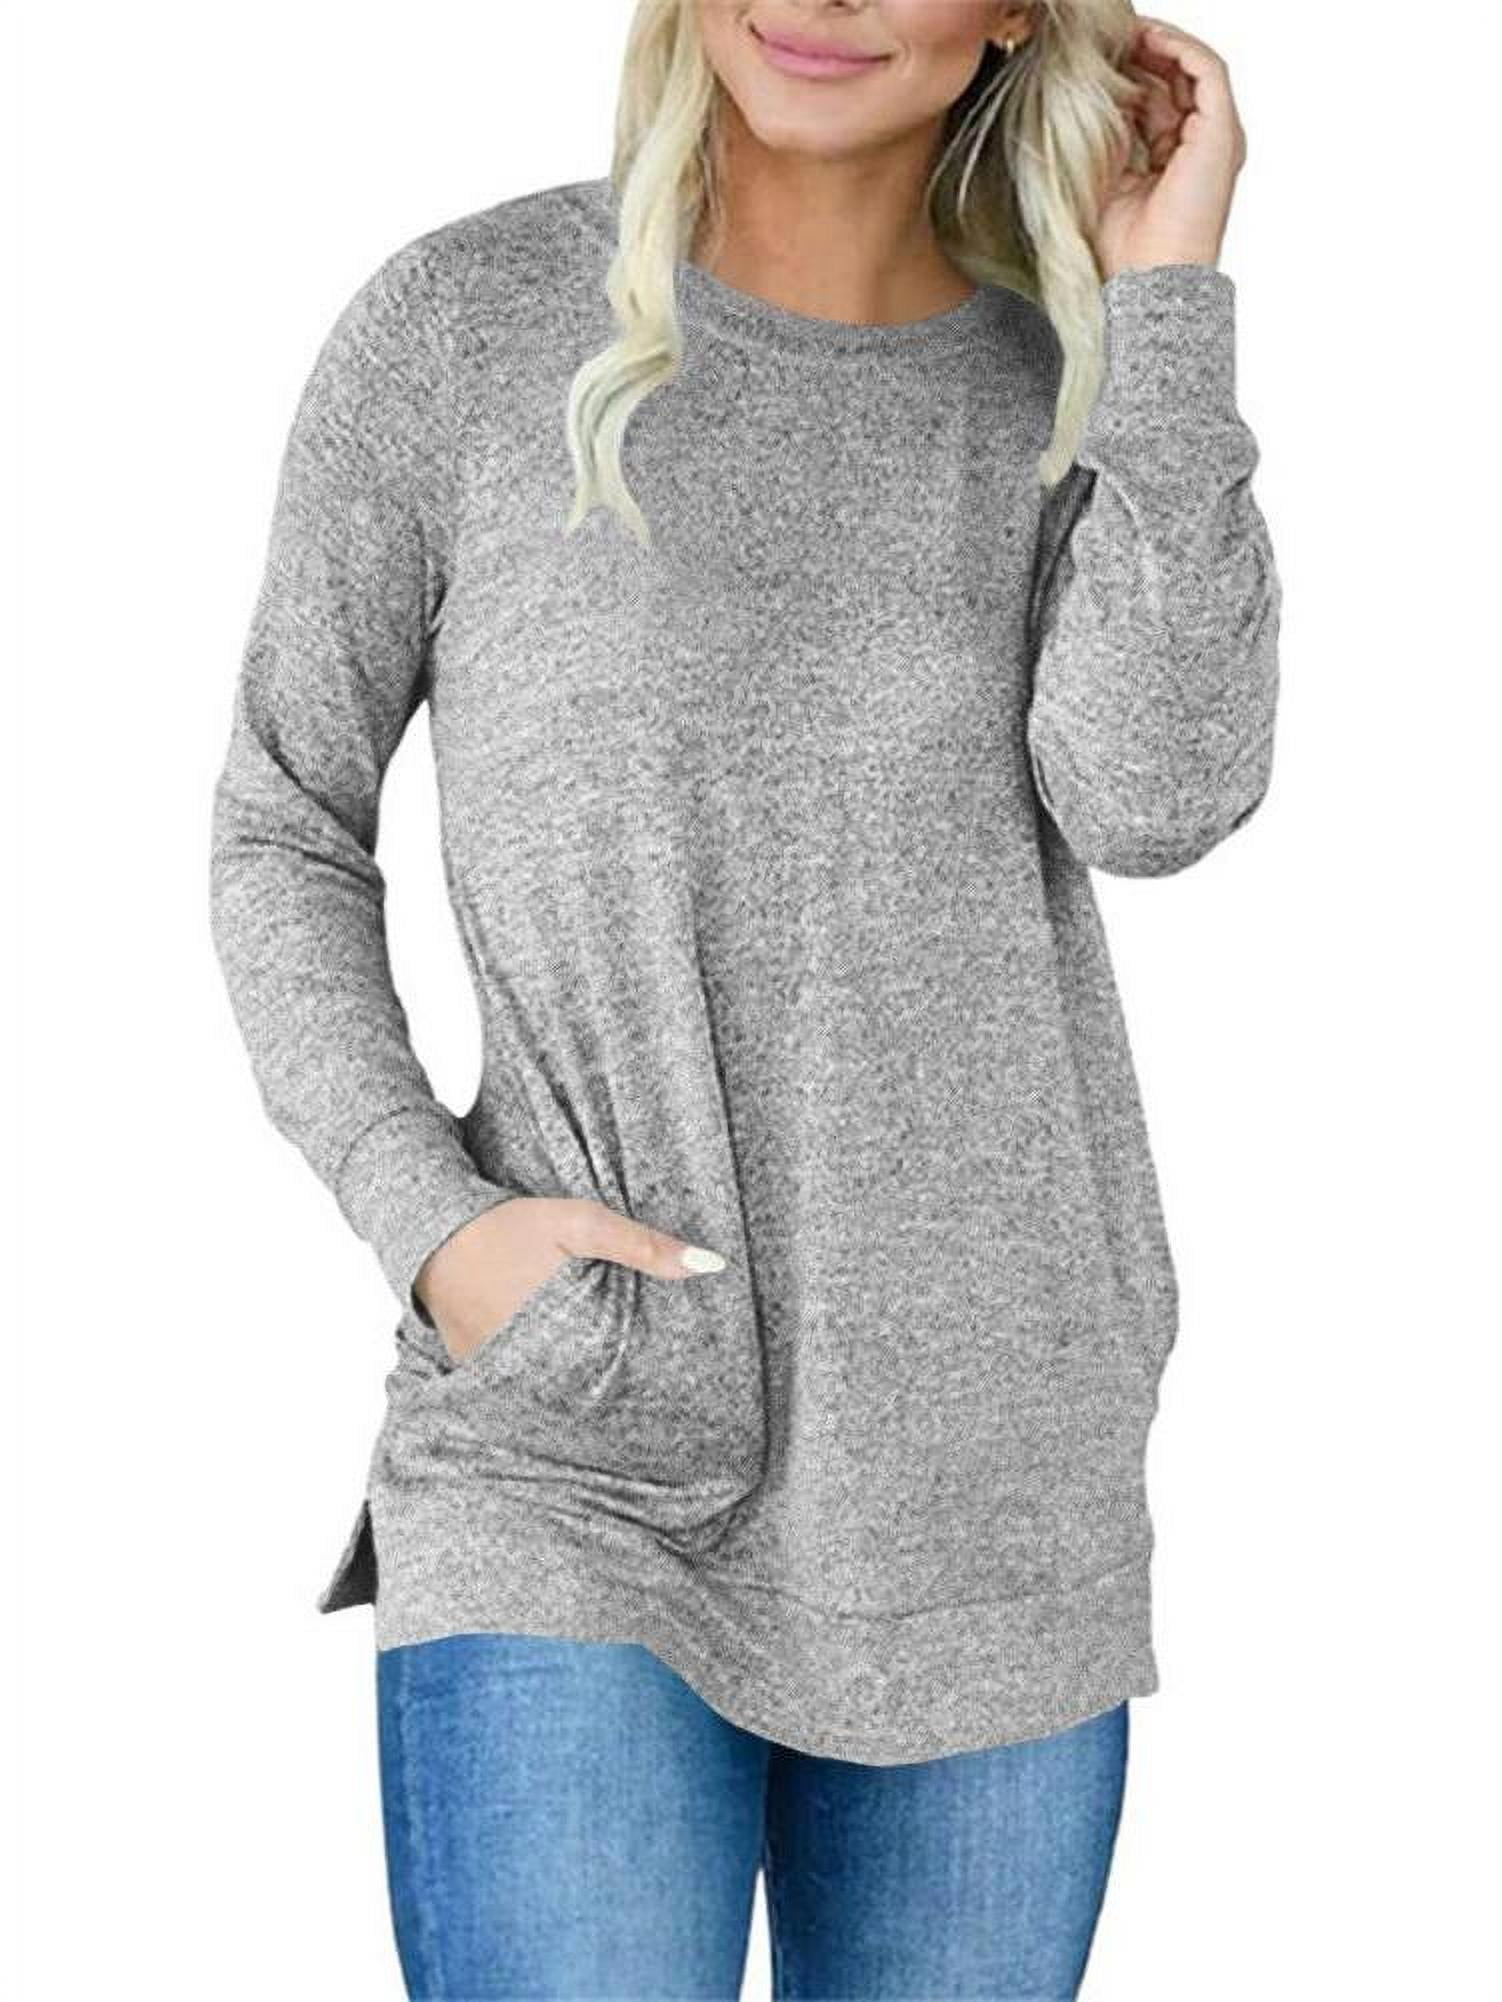 LACOZY Women Tunic Long Sleeve Round Neck Sweatshirts for Women Gray ...